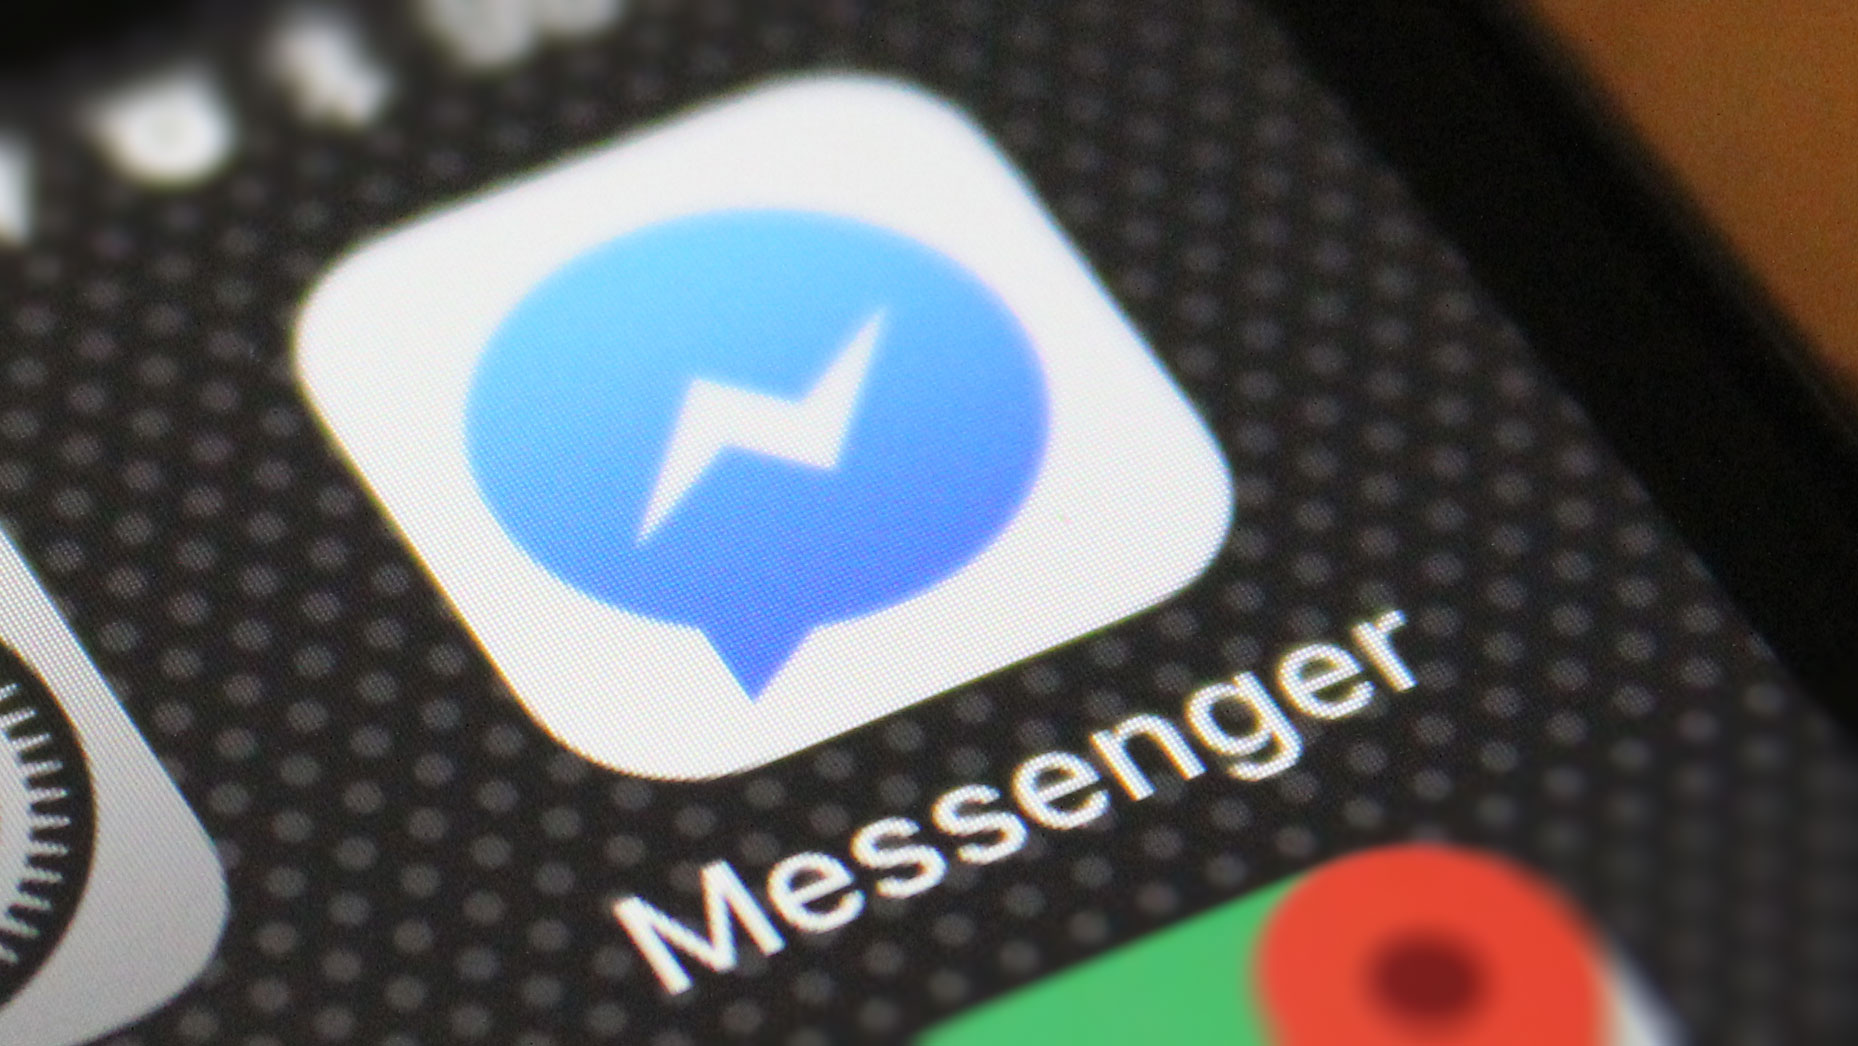 Facebook messenger app on xbox